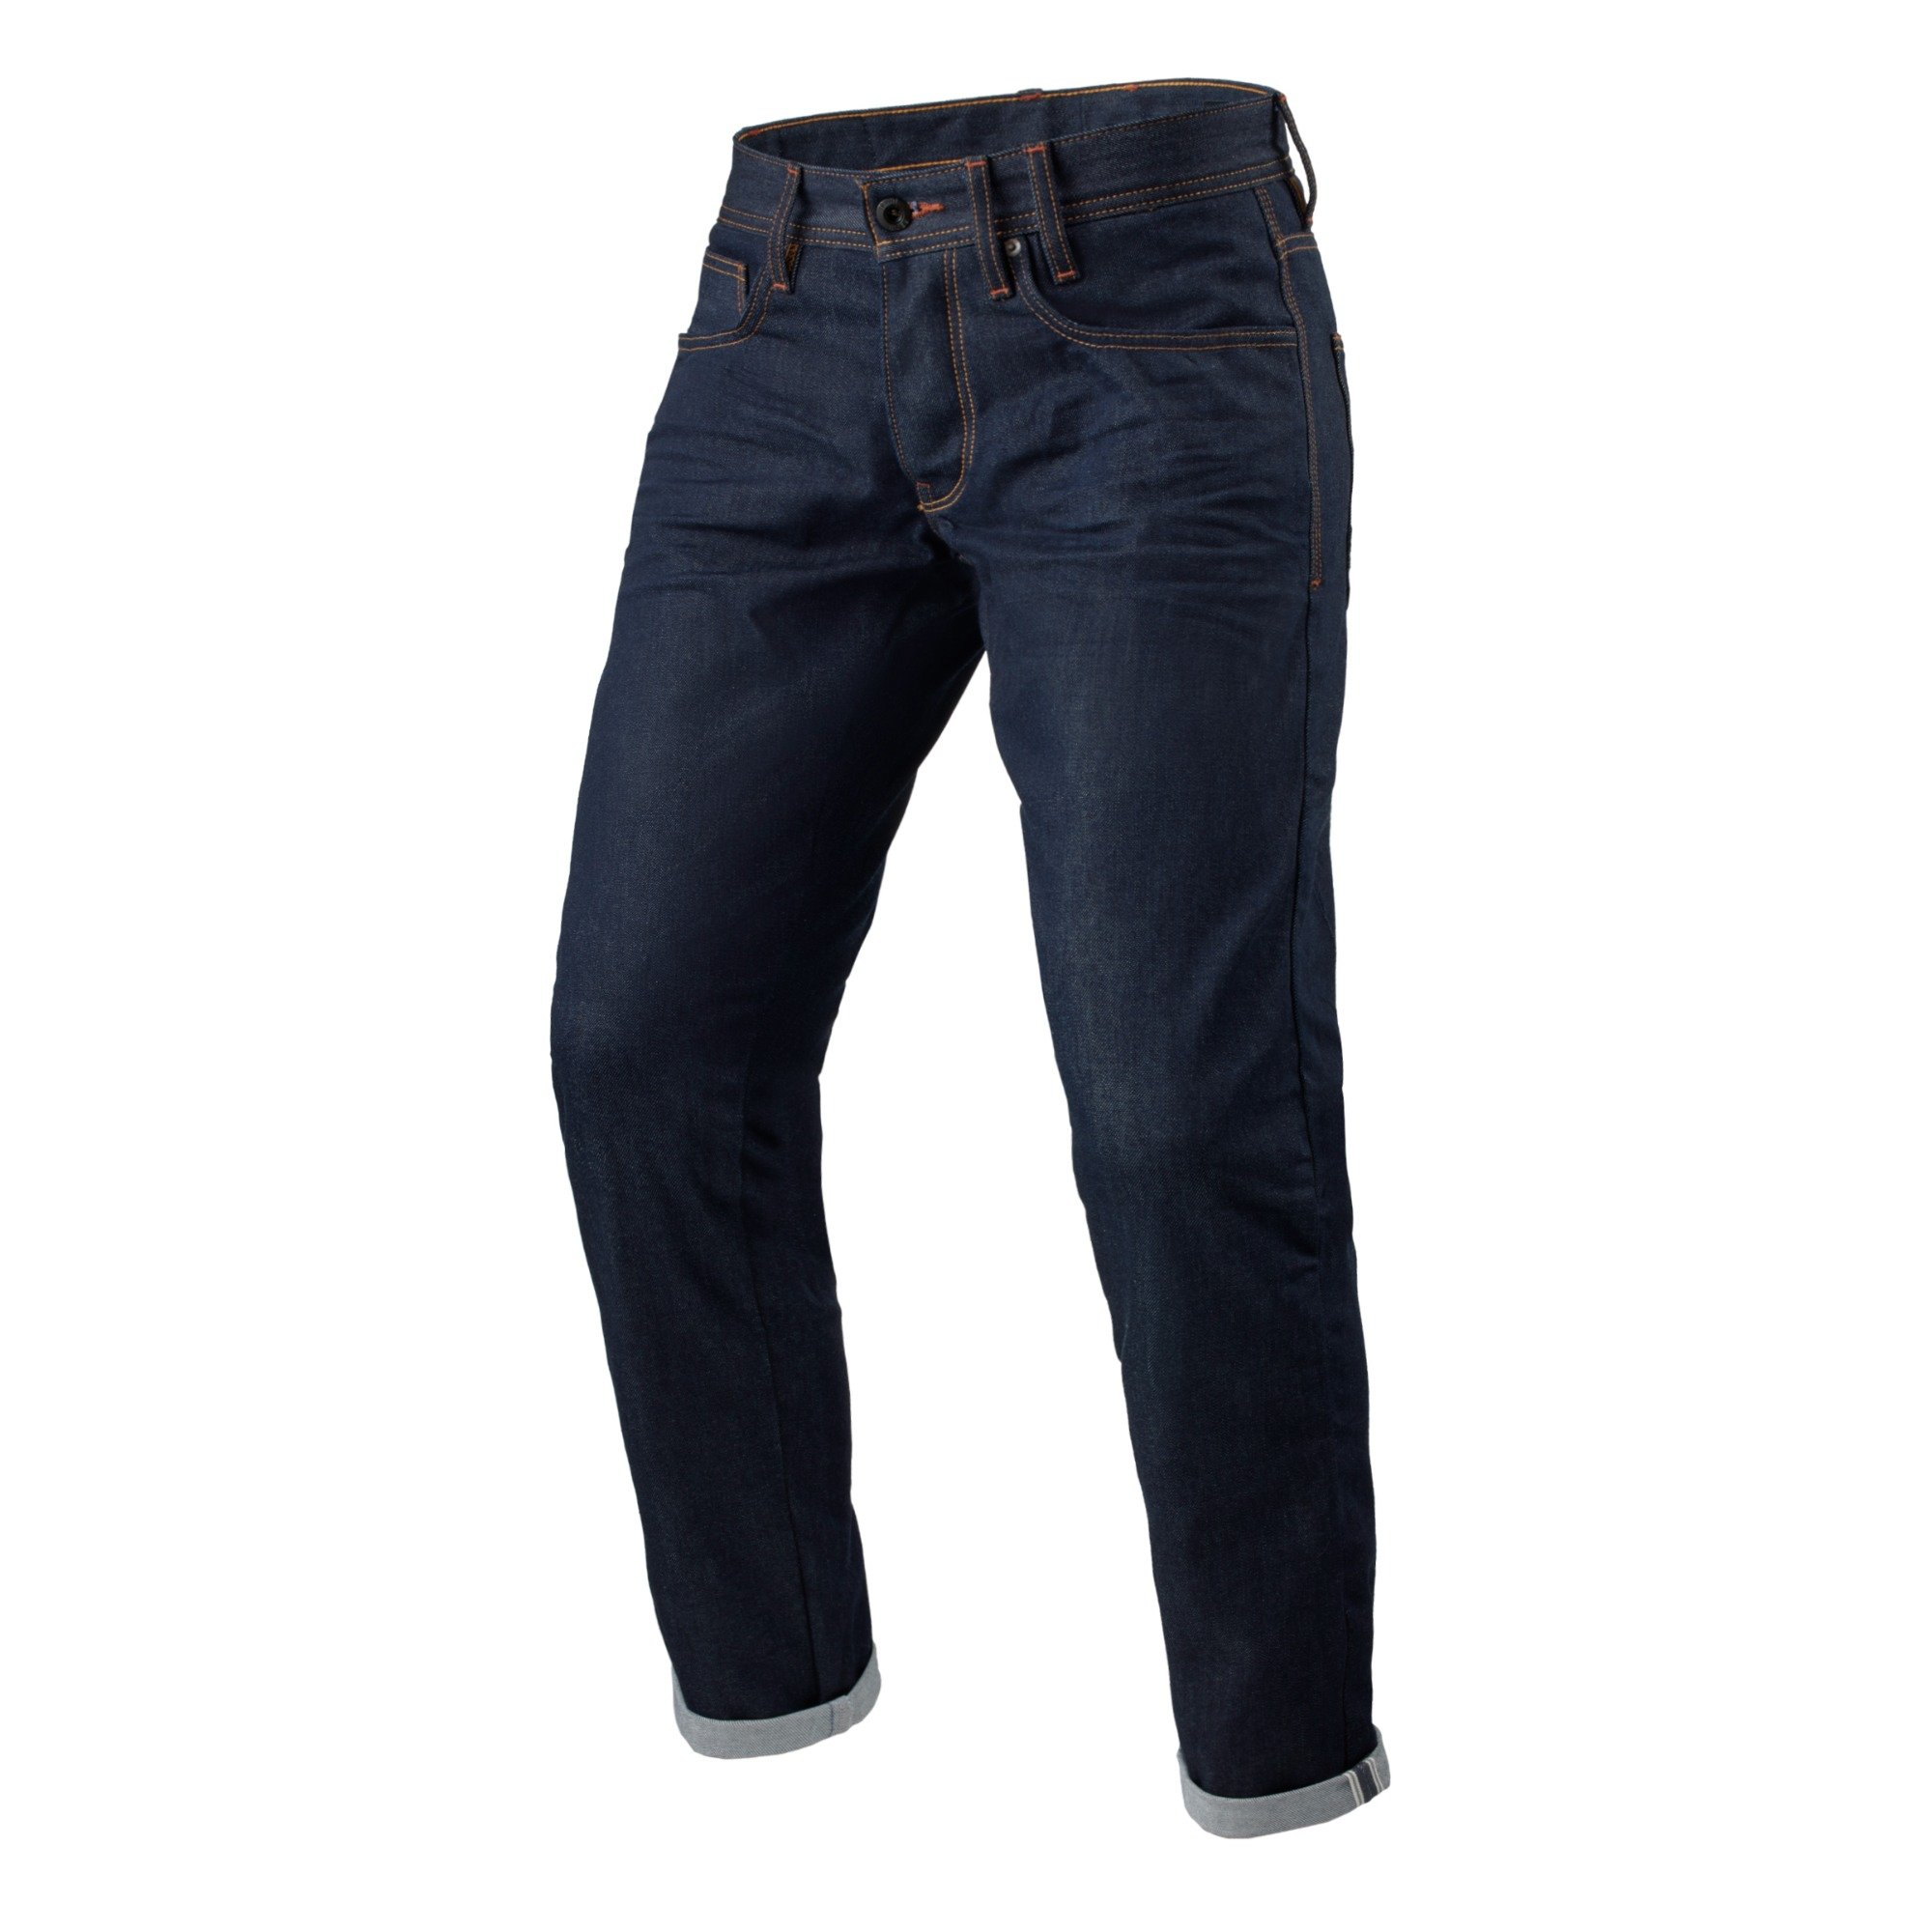 Image of REV'IT! Jeans Lewis Selvedge TF Dark Blue L32 Motorcycle Pants Size L32/W32 EN